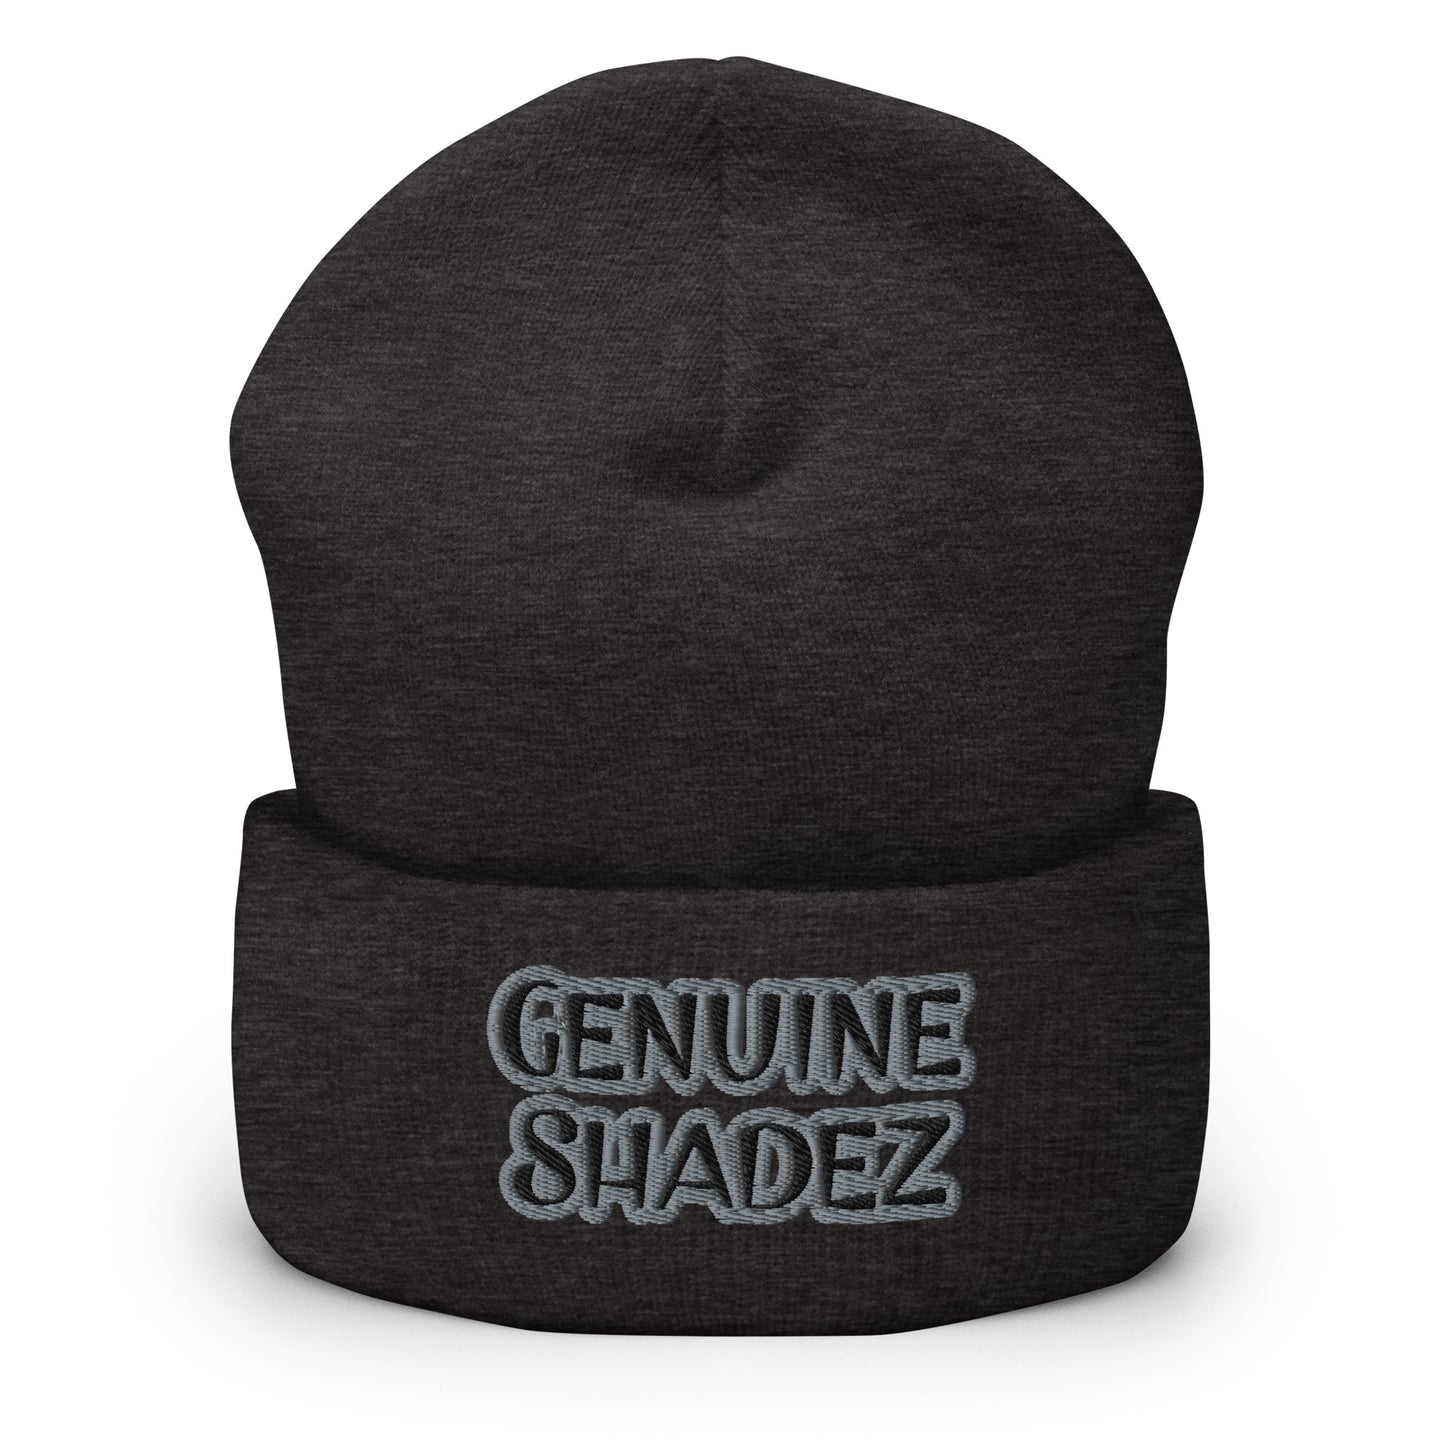 Genuine Shadez, black - Cuffed Beanie